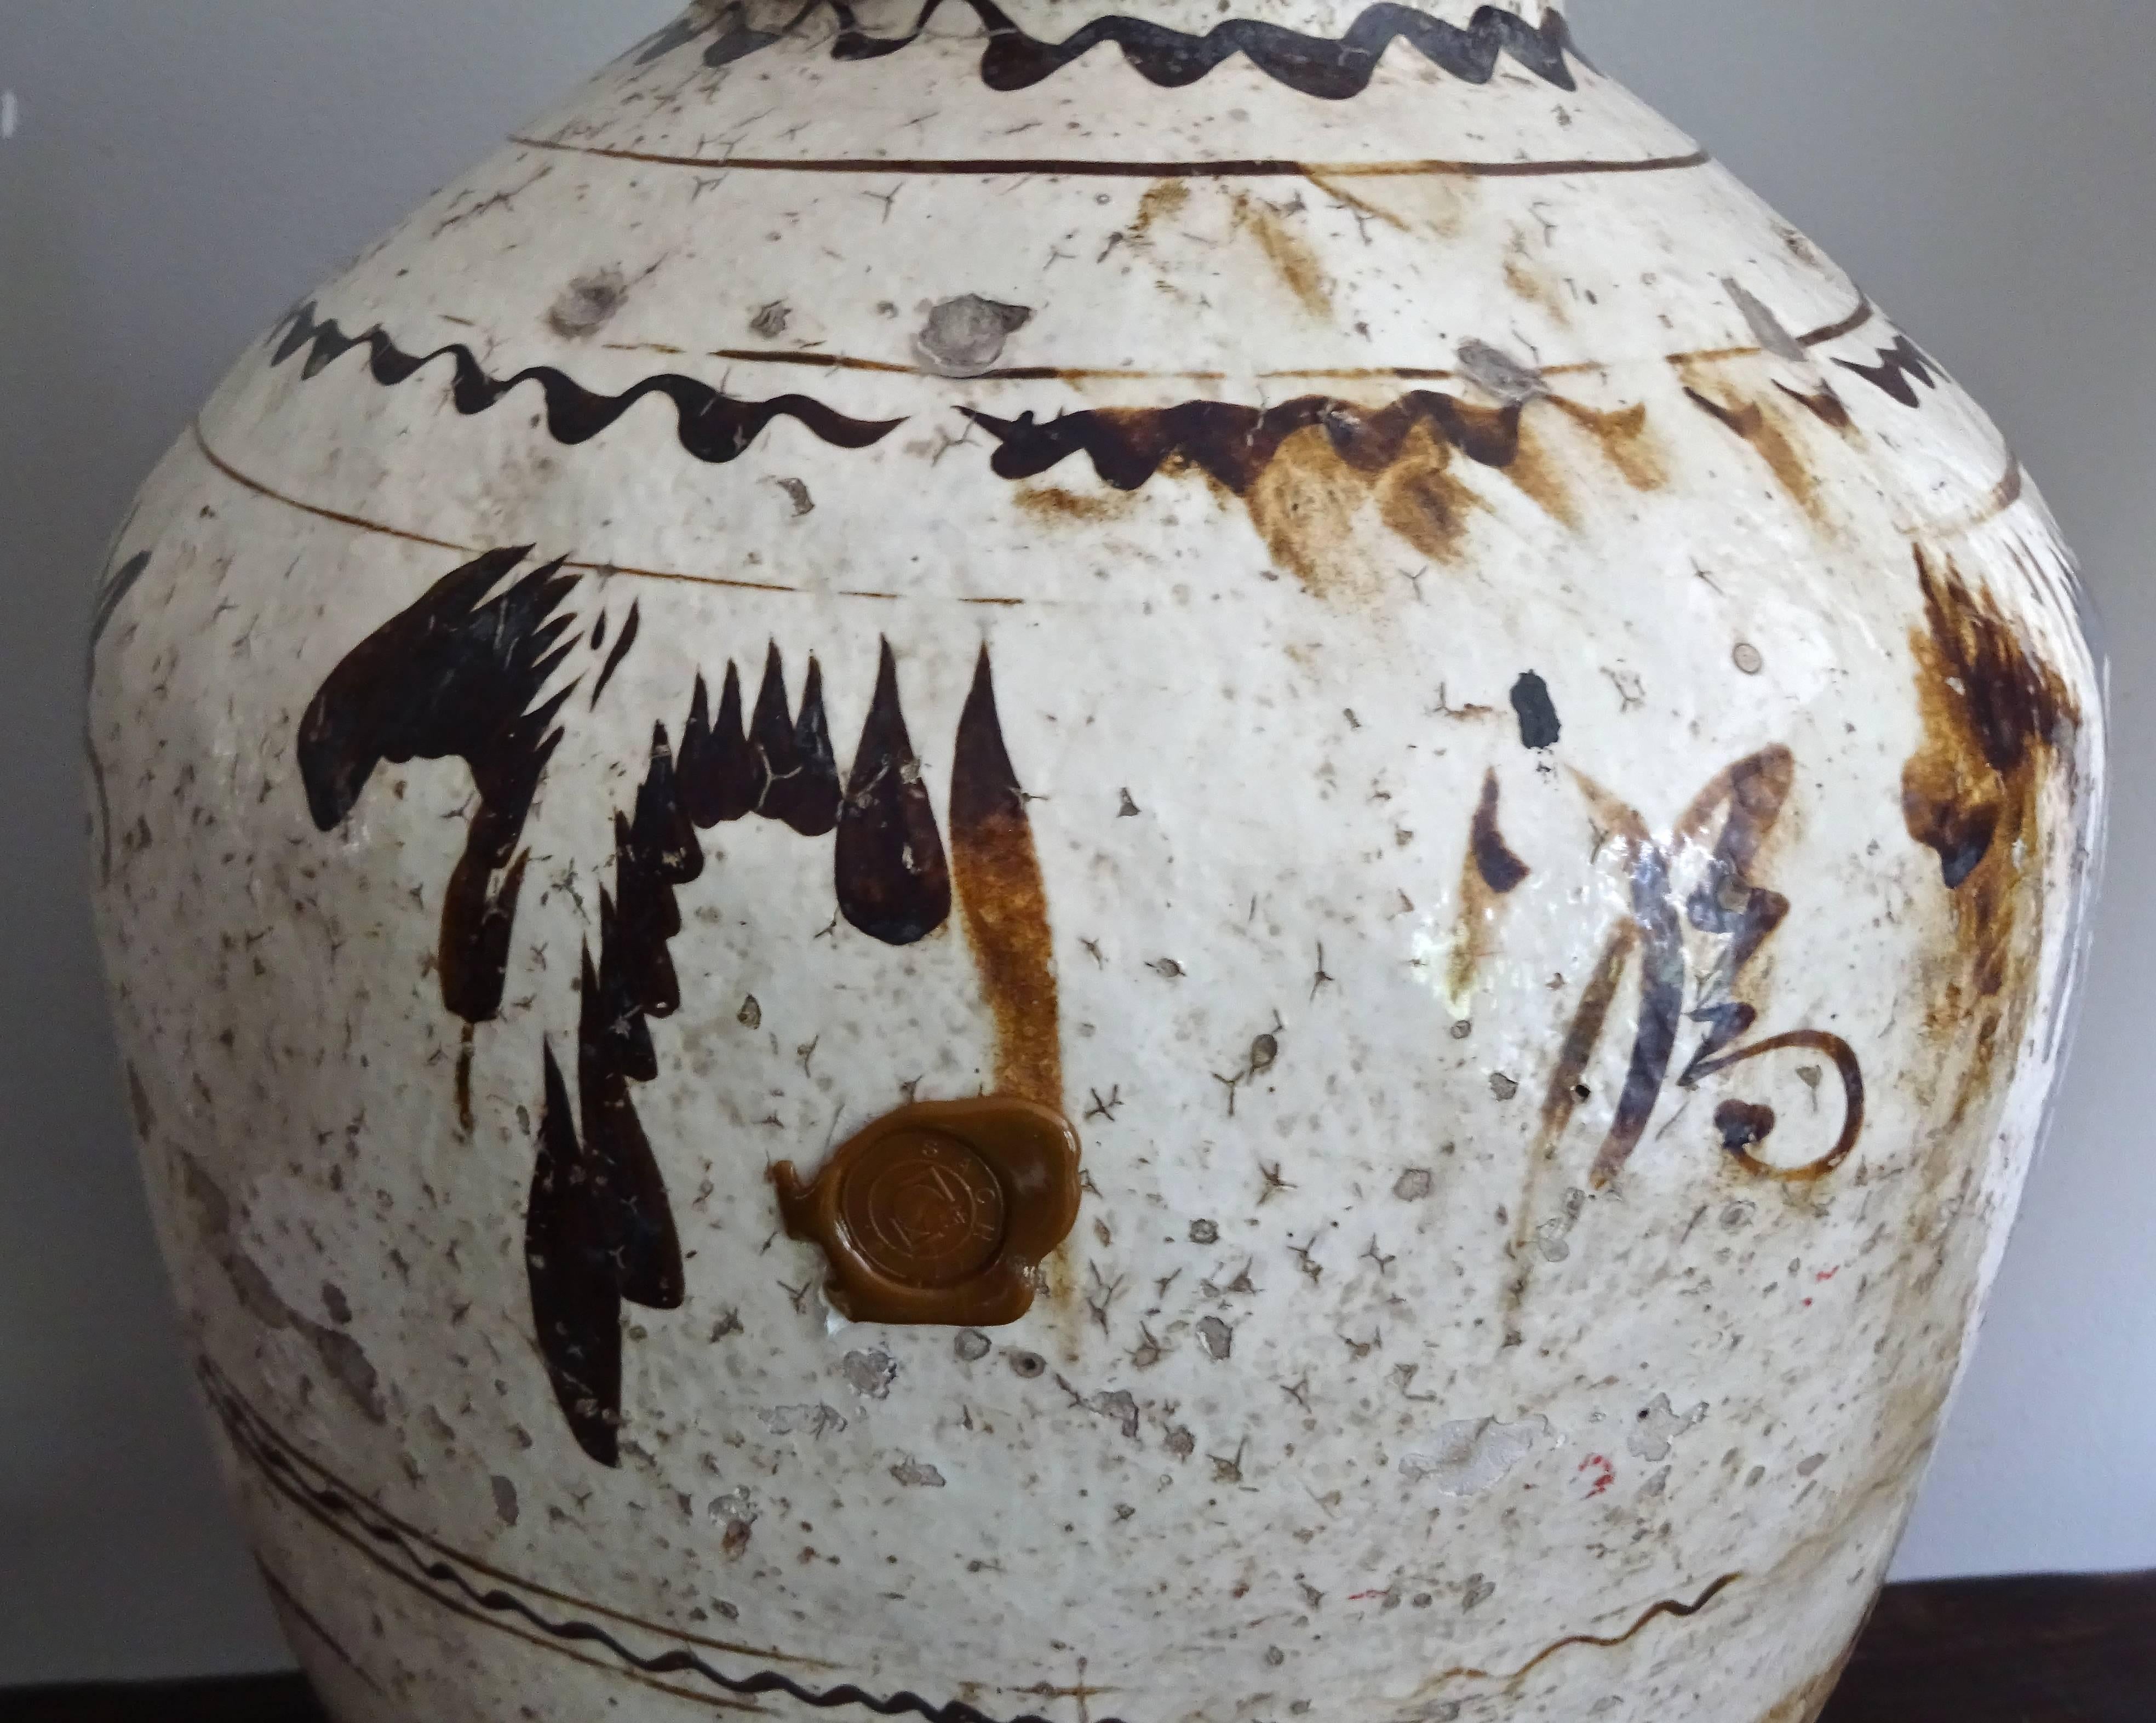 Chinese hand-painted, glazed ceramic wine vessel.